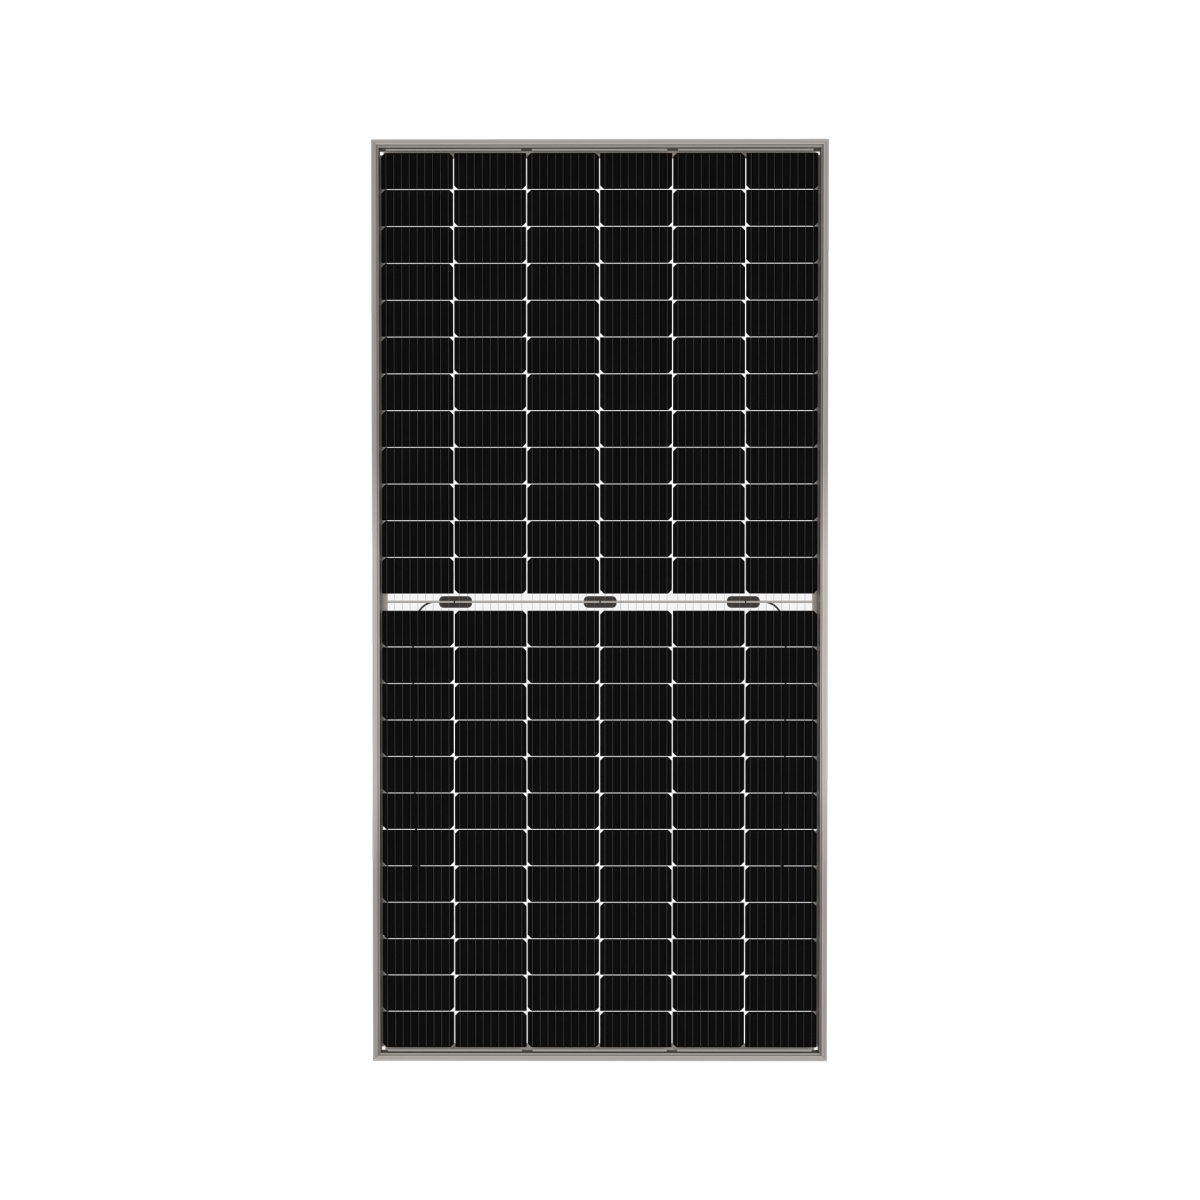 TommaTech 435 Watt 144 Percmono Bifacial Half-Cut Multi Busbar Solar Panel